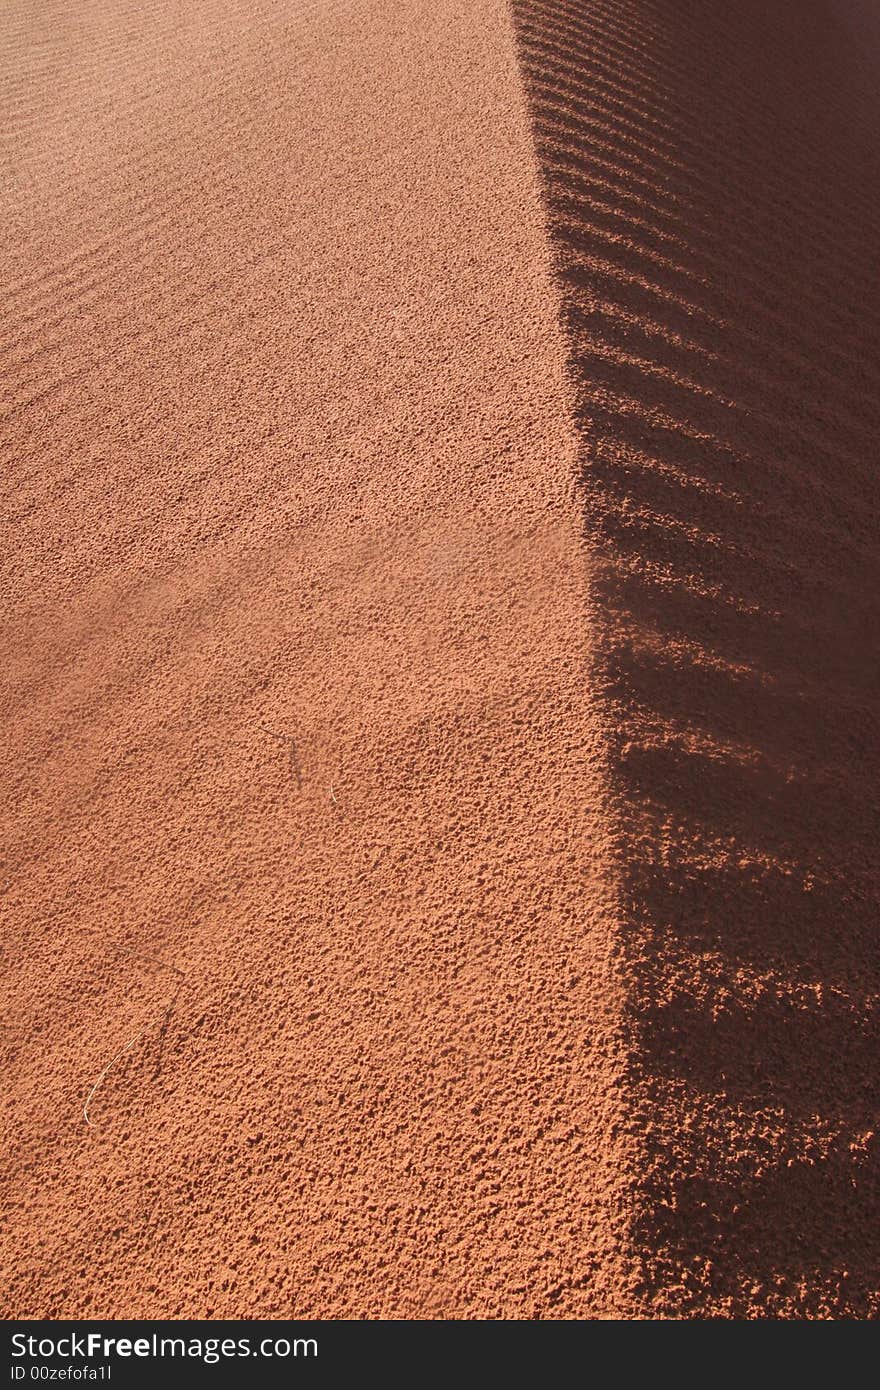 Beautiful desert scenic in Arizona. Northern Arizona. USA